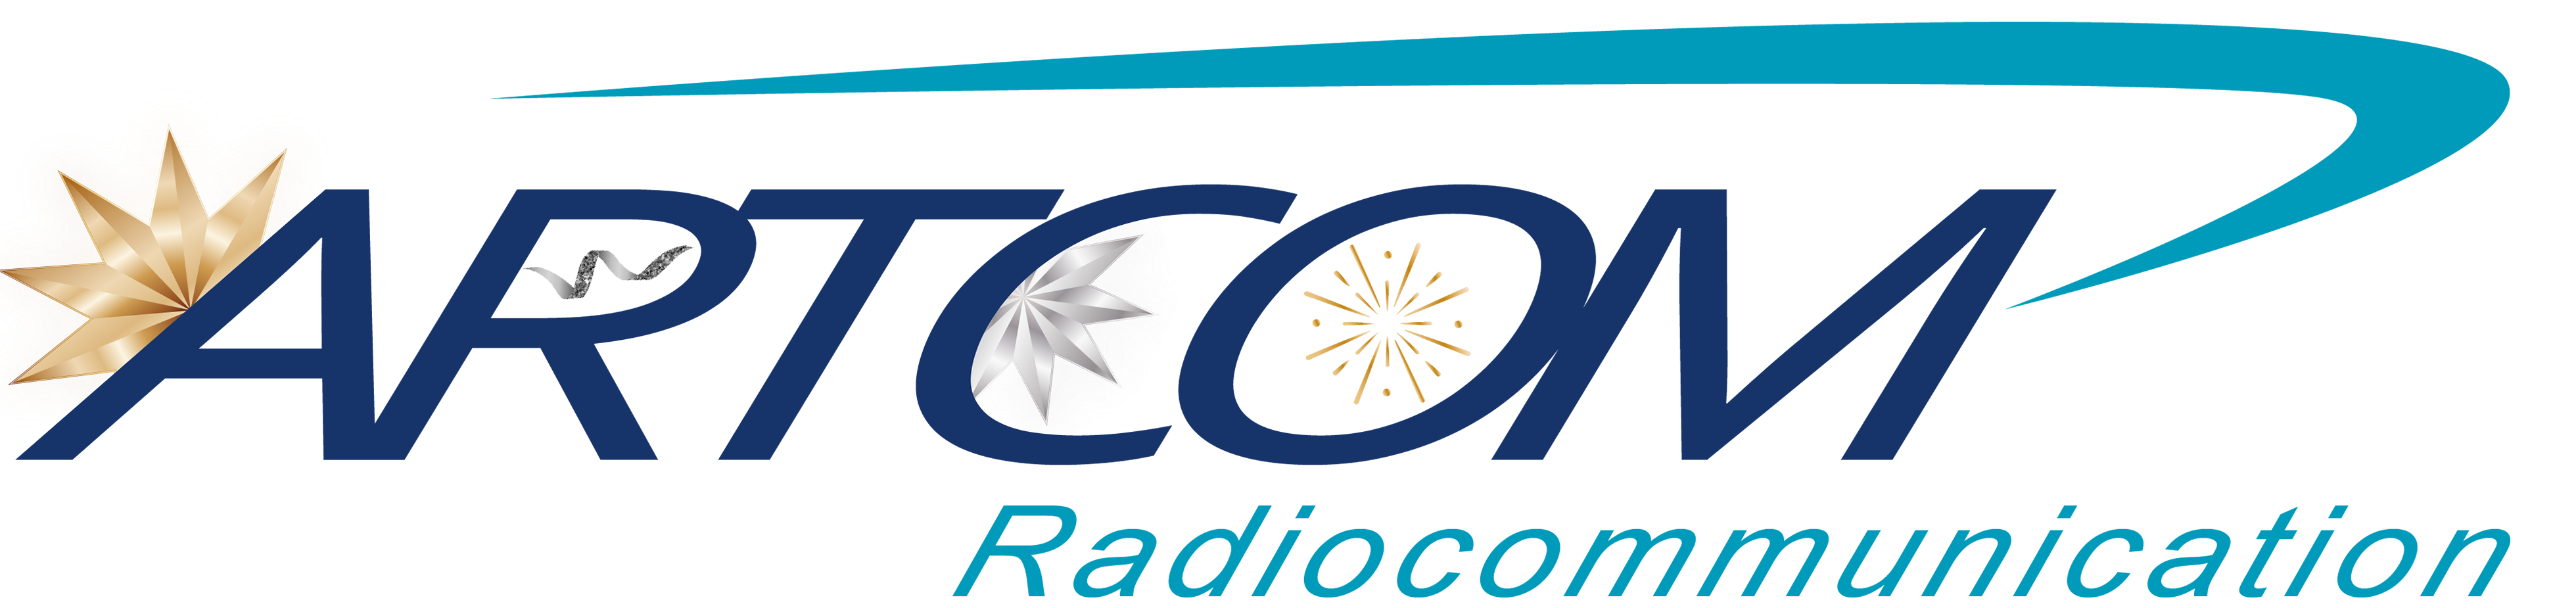 ARTCOM radiocommunication